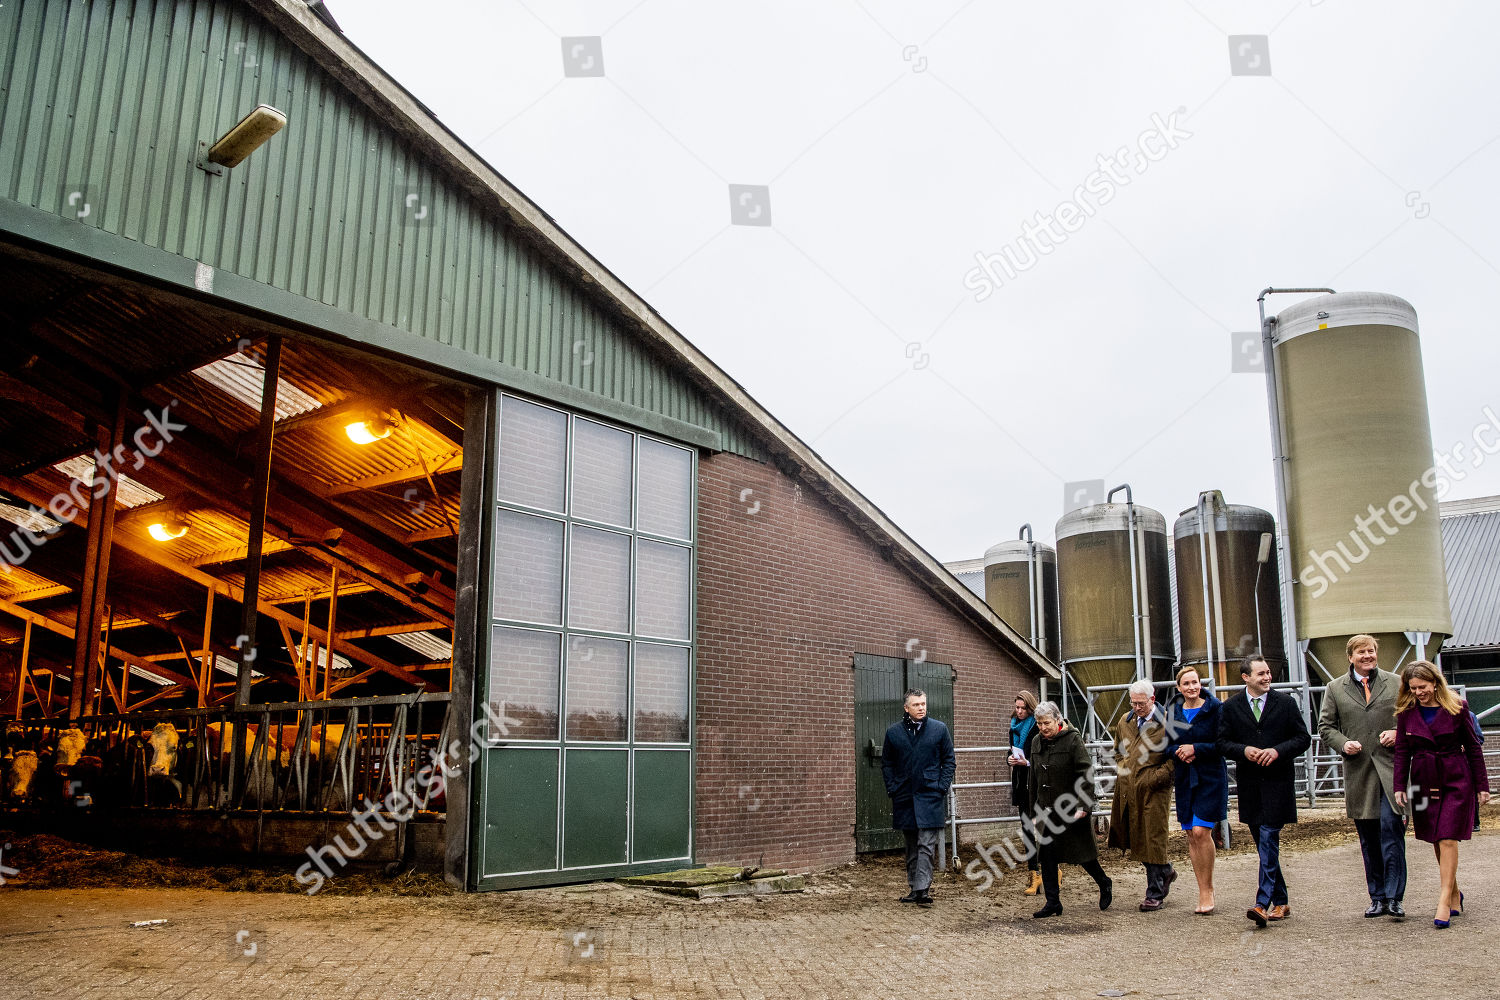 visit-to-dairy-farm-groot-steinfort-joppe-netherlands-shutterstock-editorial-9996881at.jpg